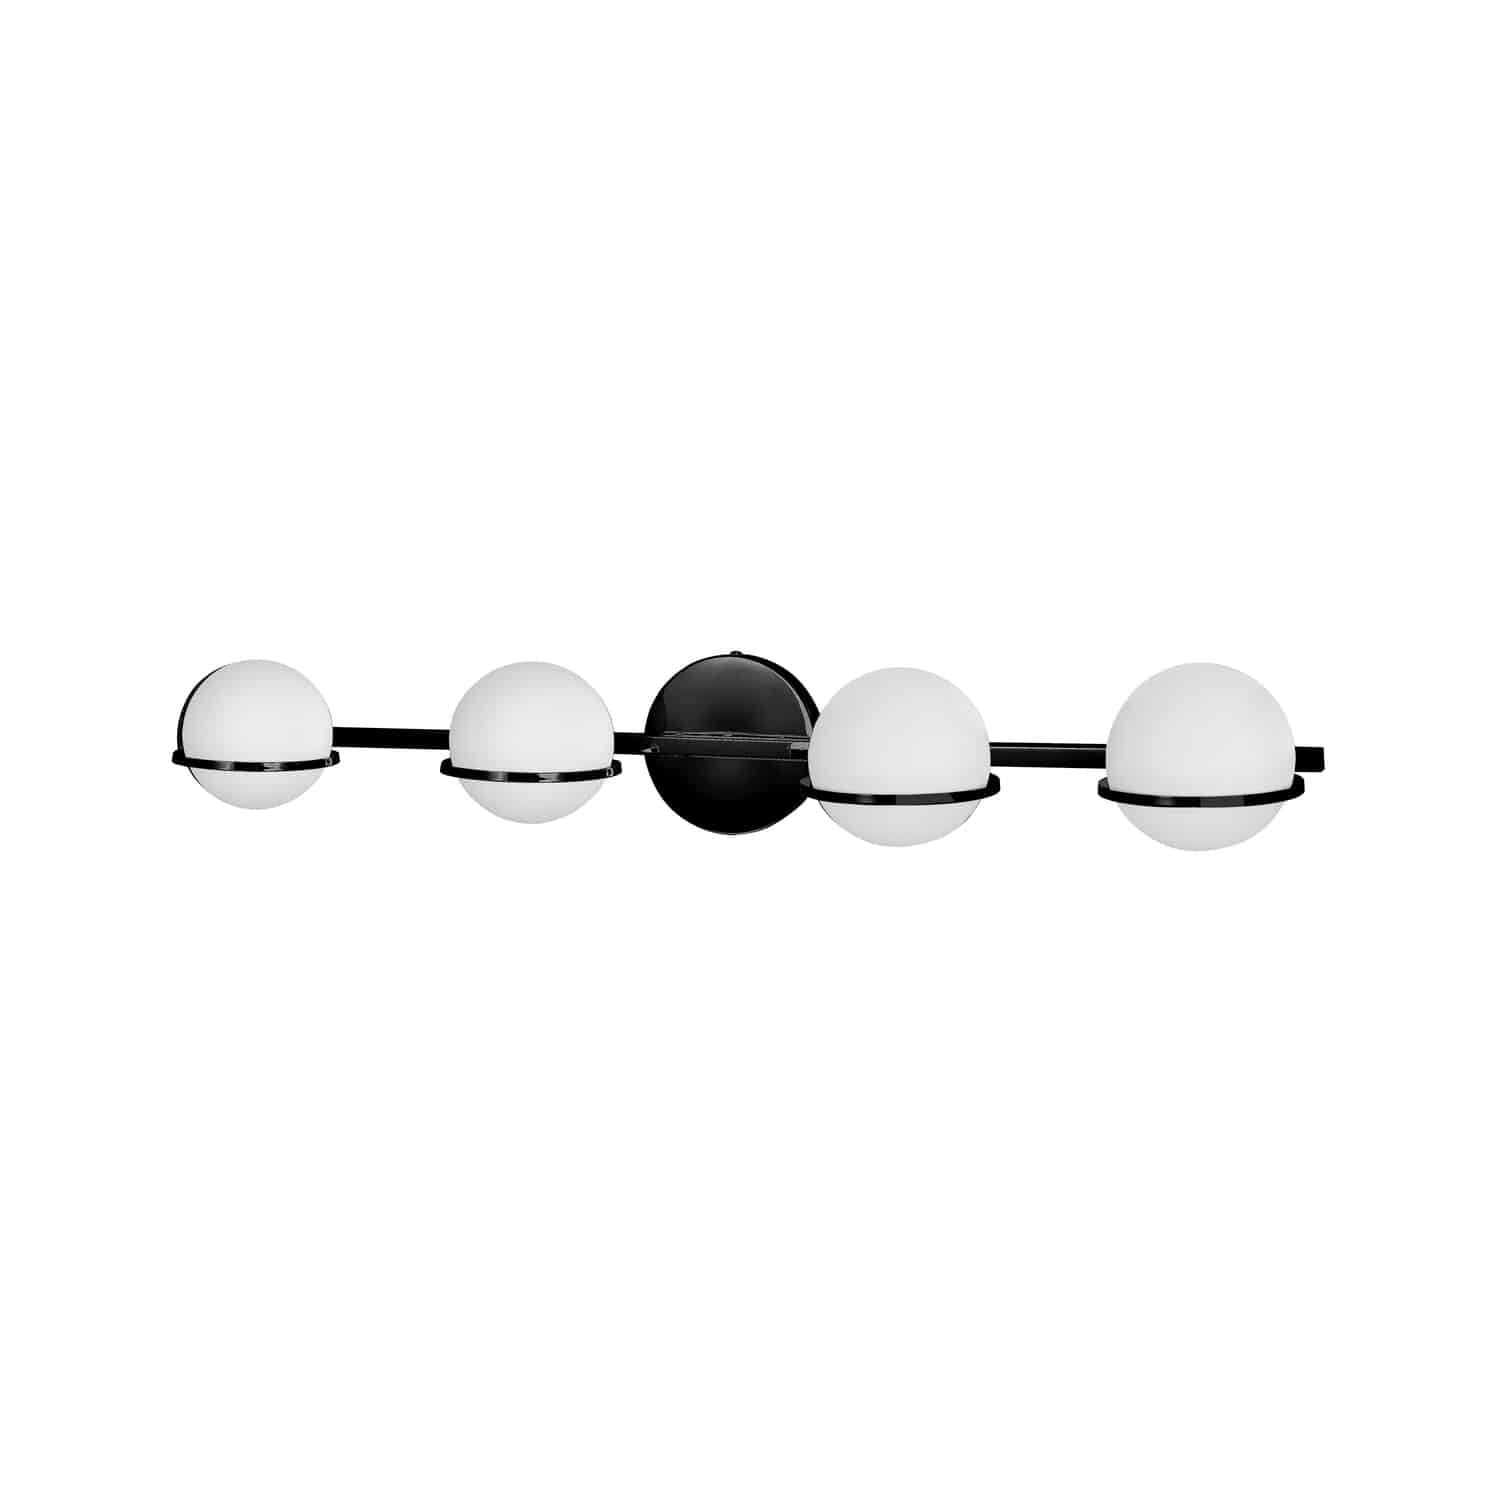 Dainolite Sofia - SOF-324W-MB - 4 Light Vanity Fixture Matte Black Finish with White Glass - Black